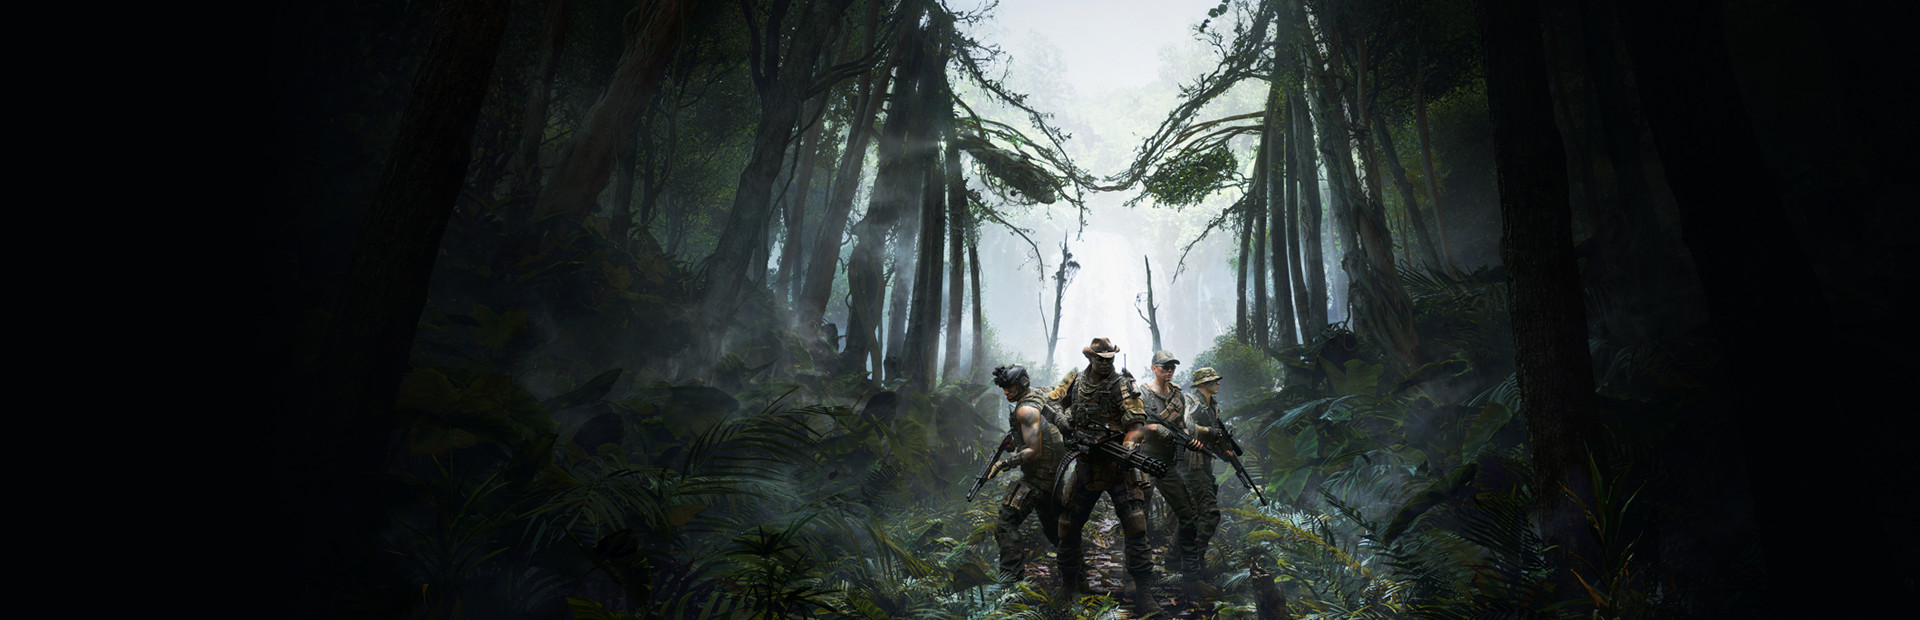 Predator: Hunting Grounds cover image